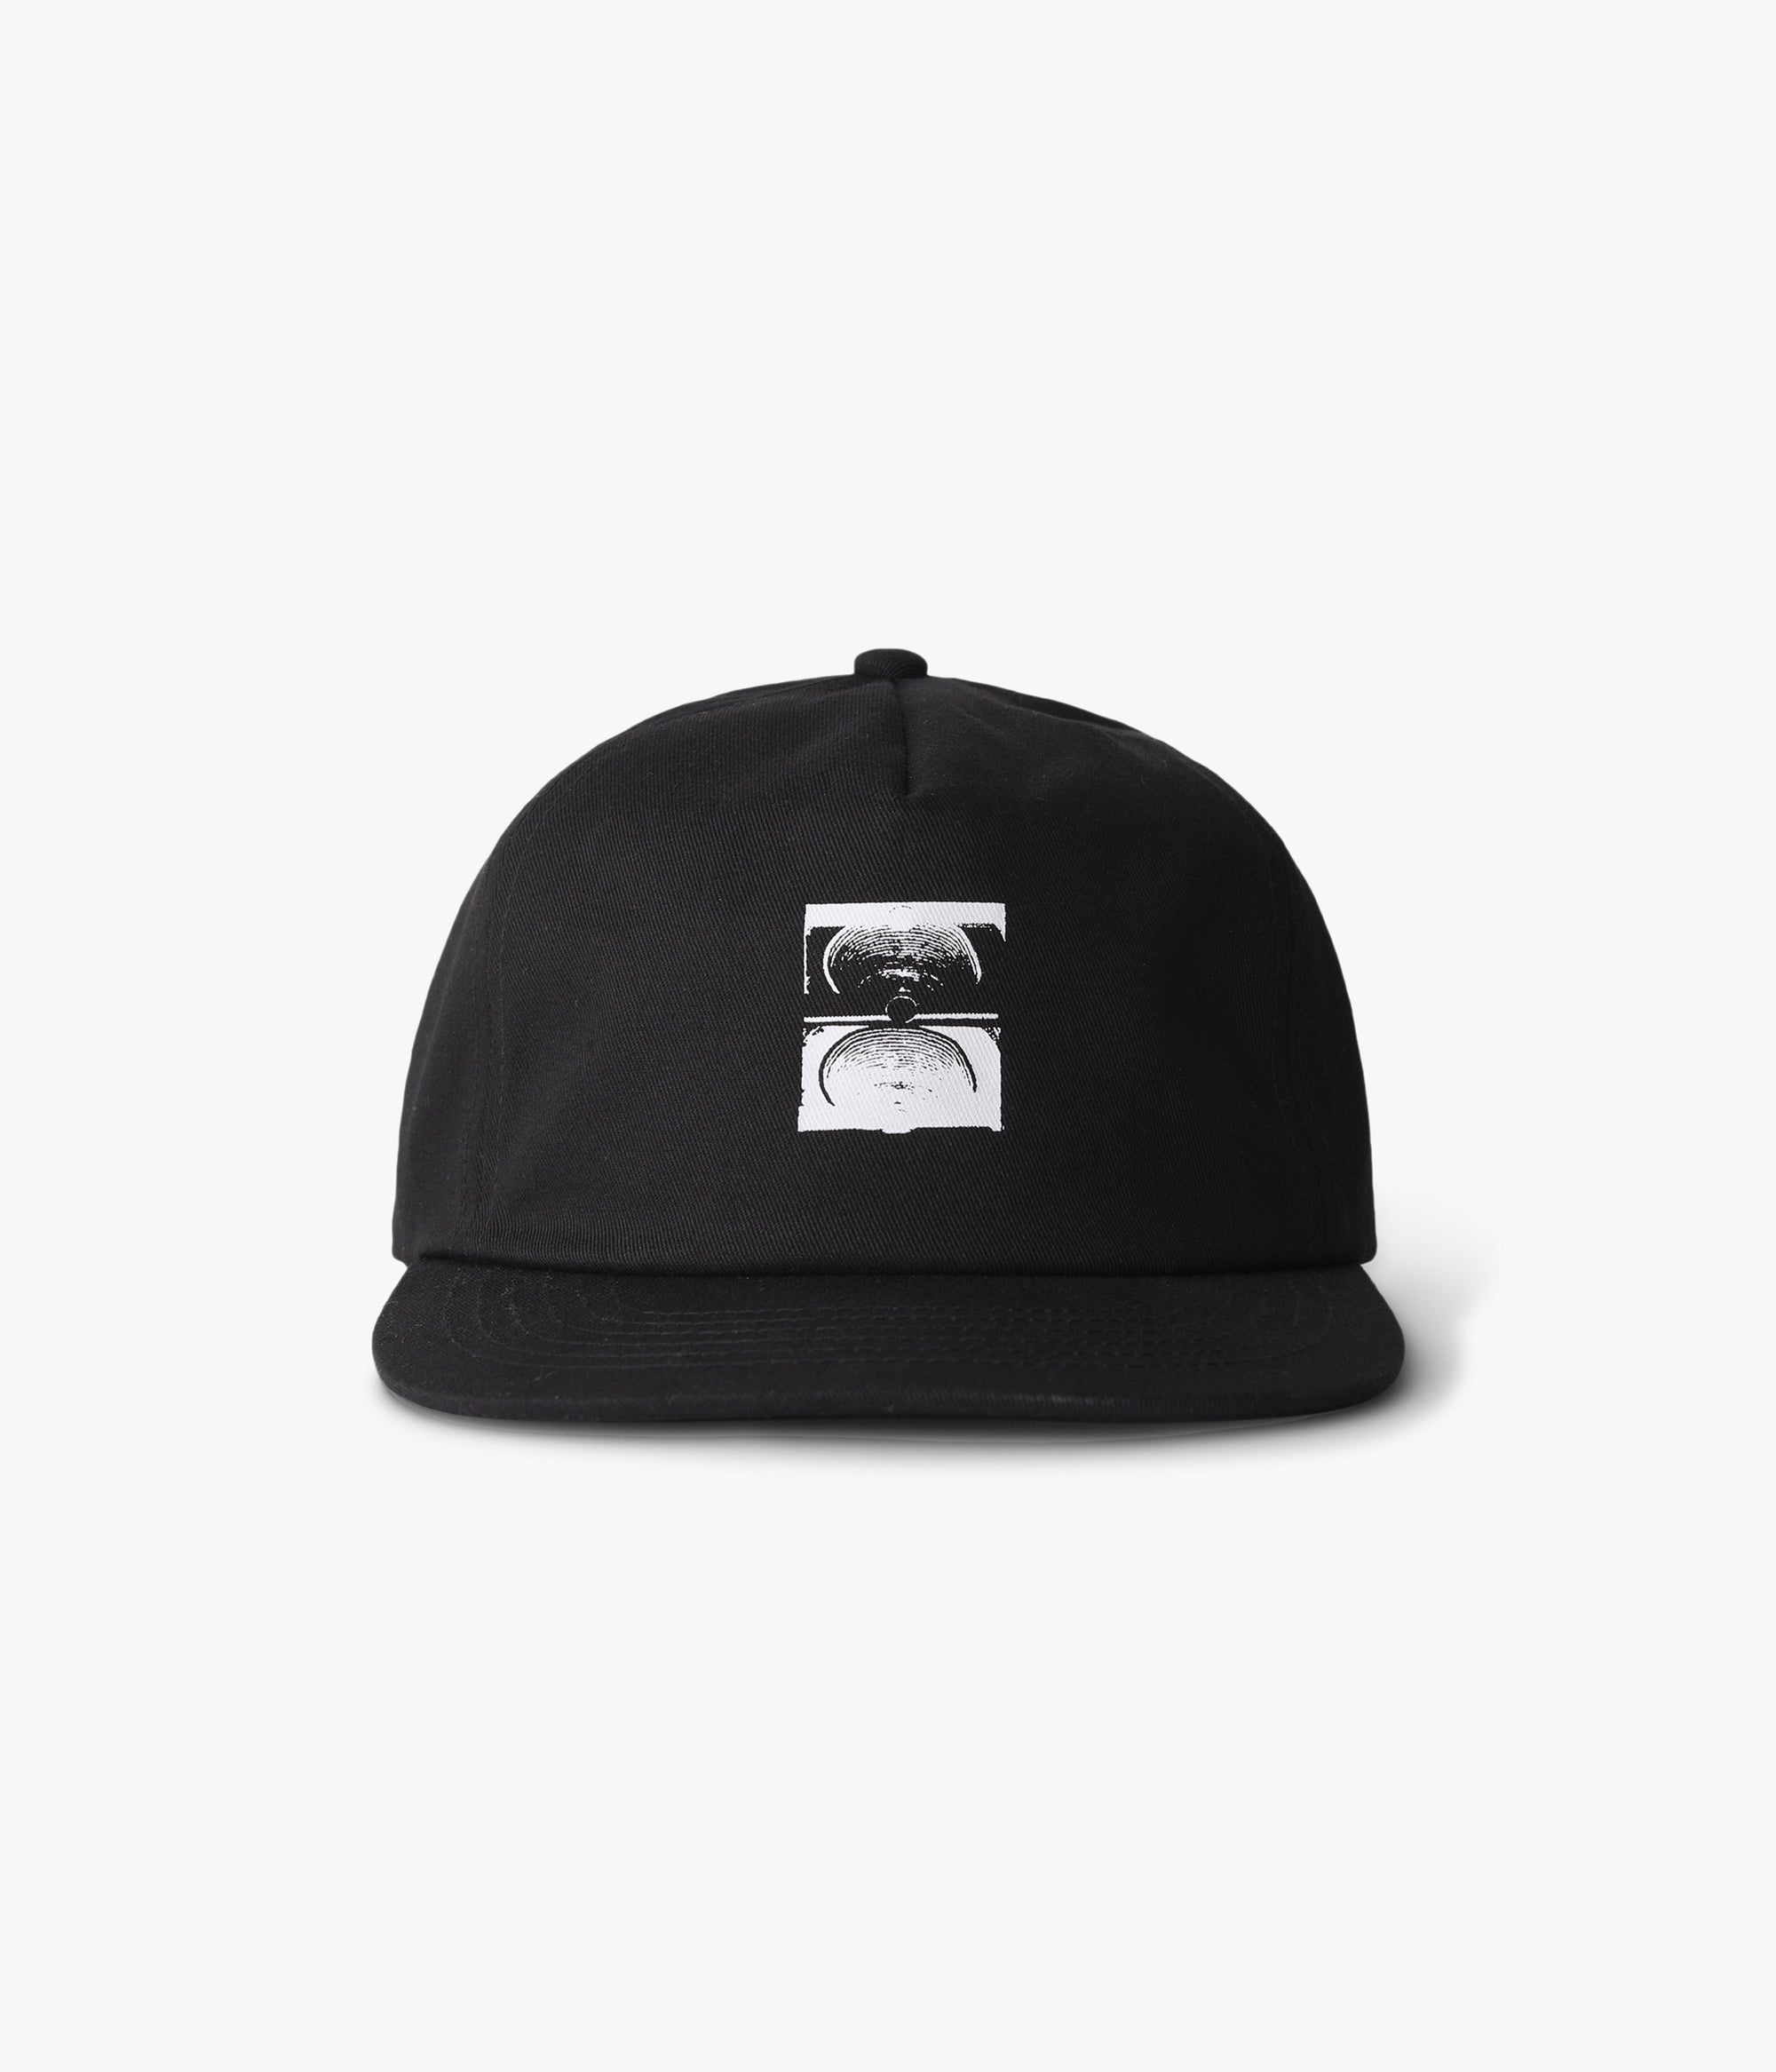 Former Merchandise - CRUX CAP - BLACK